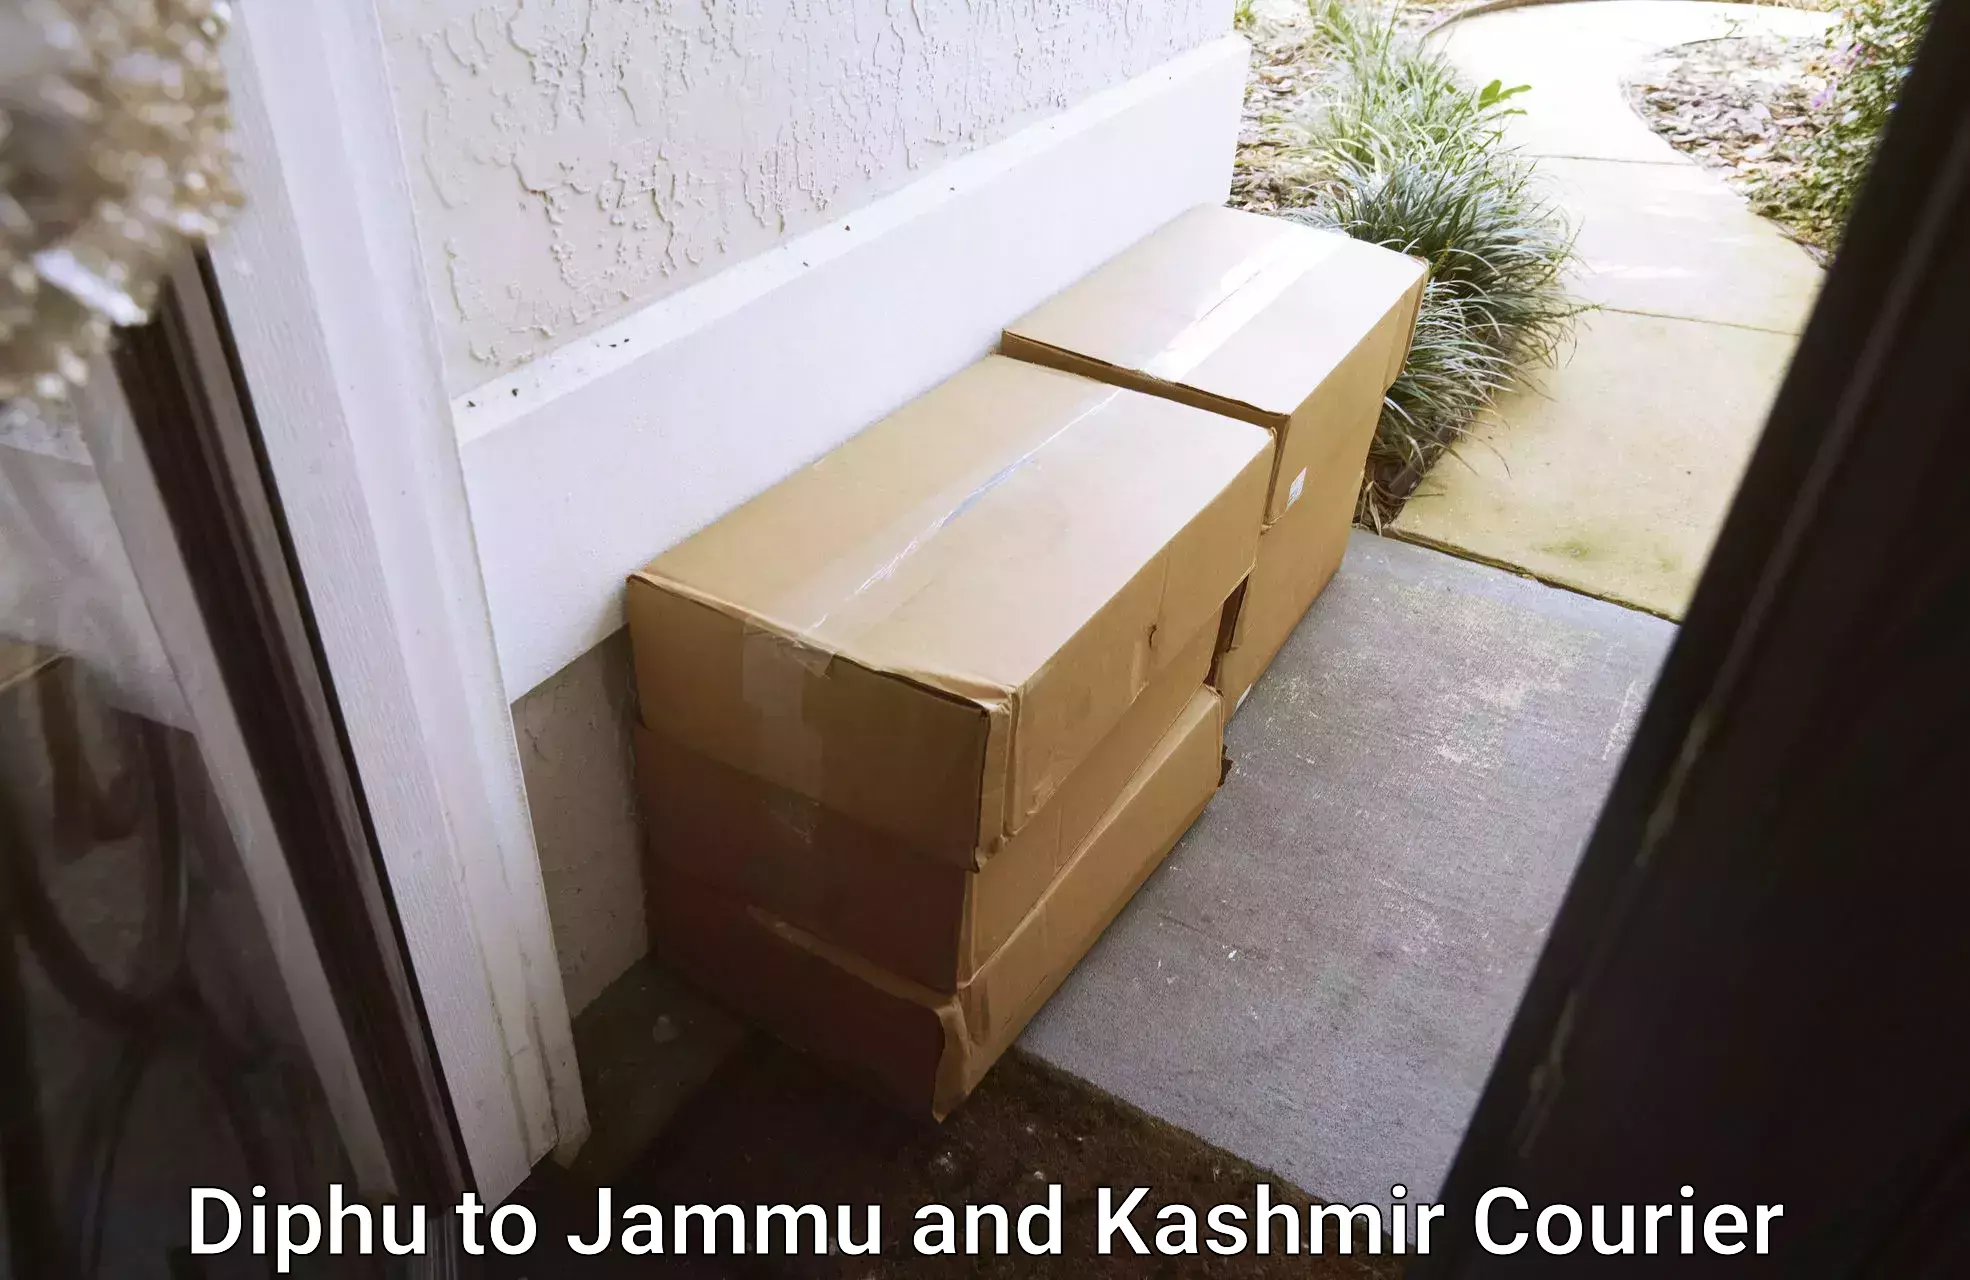 Efficient parcel service Diphu to Srinagar Kashmir